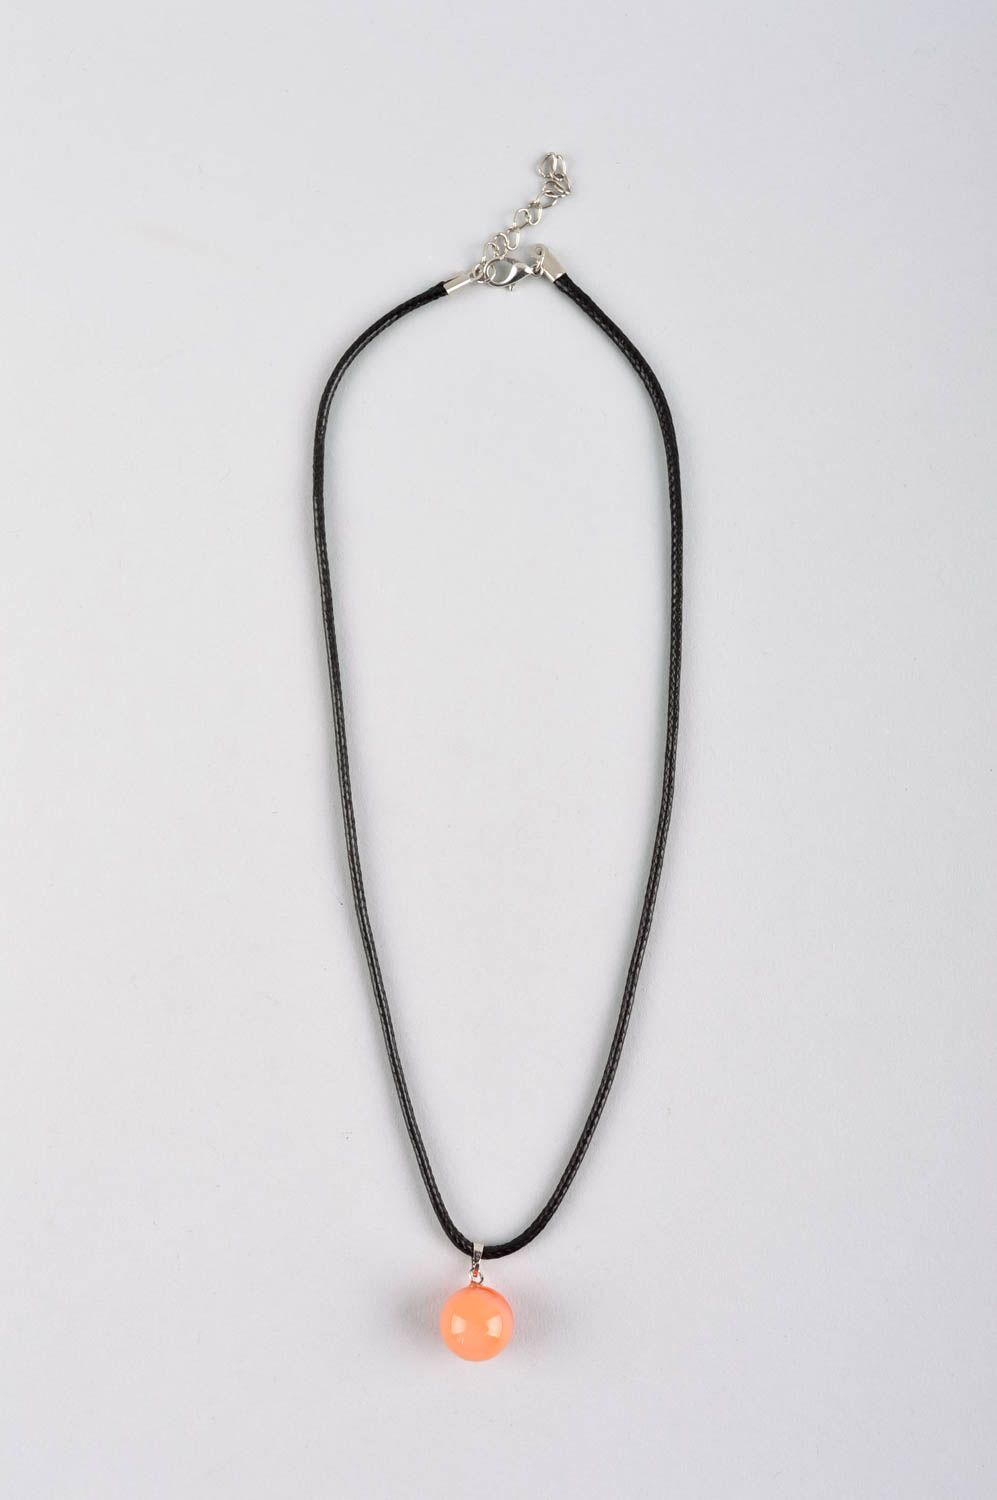 Quartz pendant handmade jewelry for women fashion pendant with natural stone  photo 2